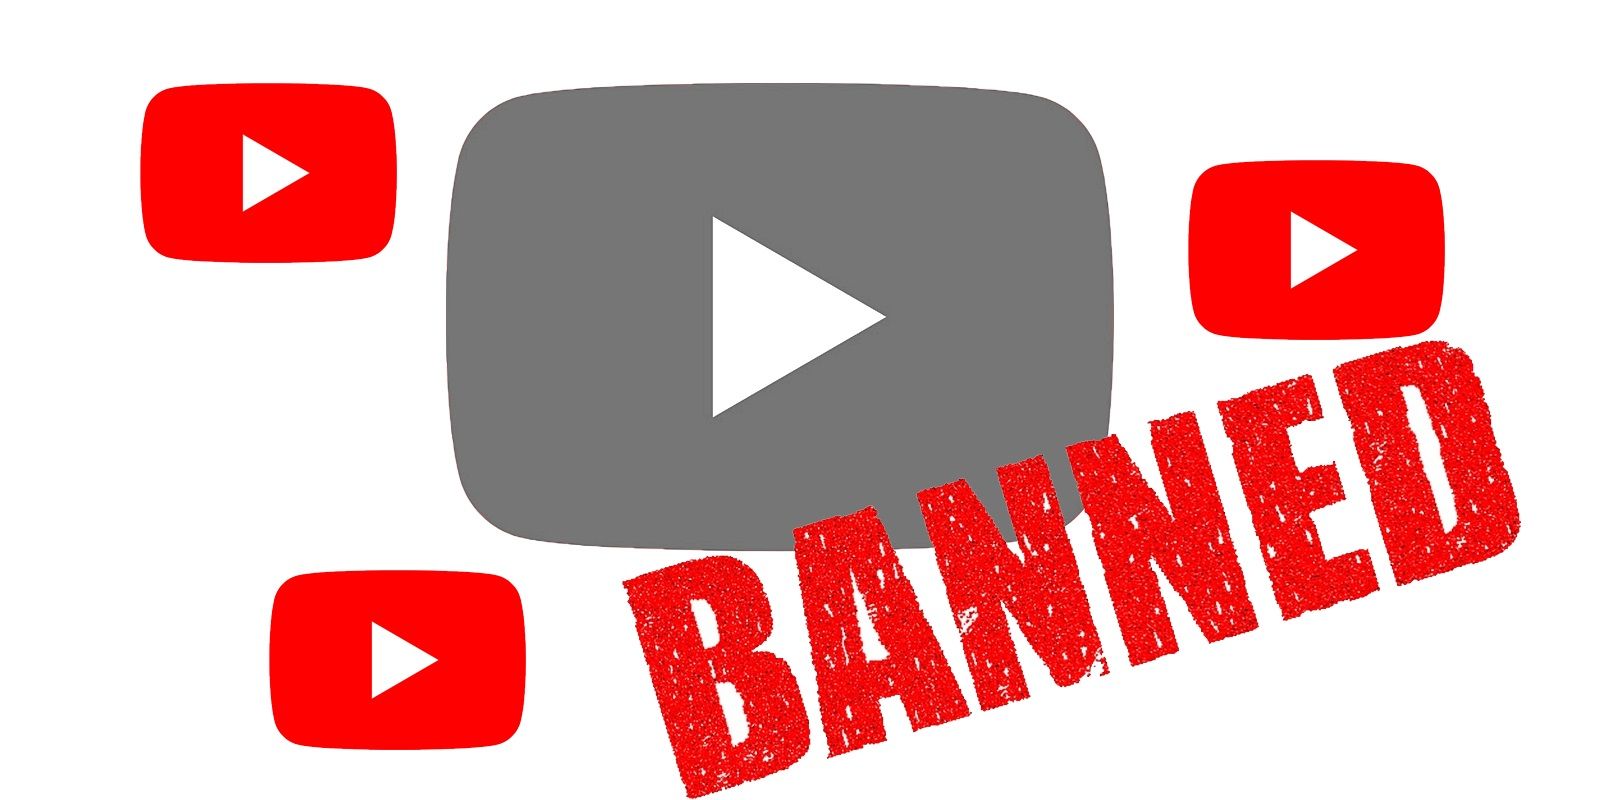 All the Recent Bans & Suspensions: YouTube, Twitter, Facebook, Reddit, Parler